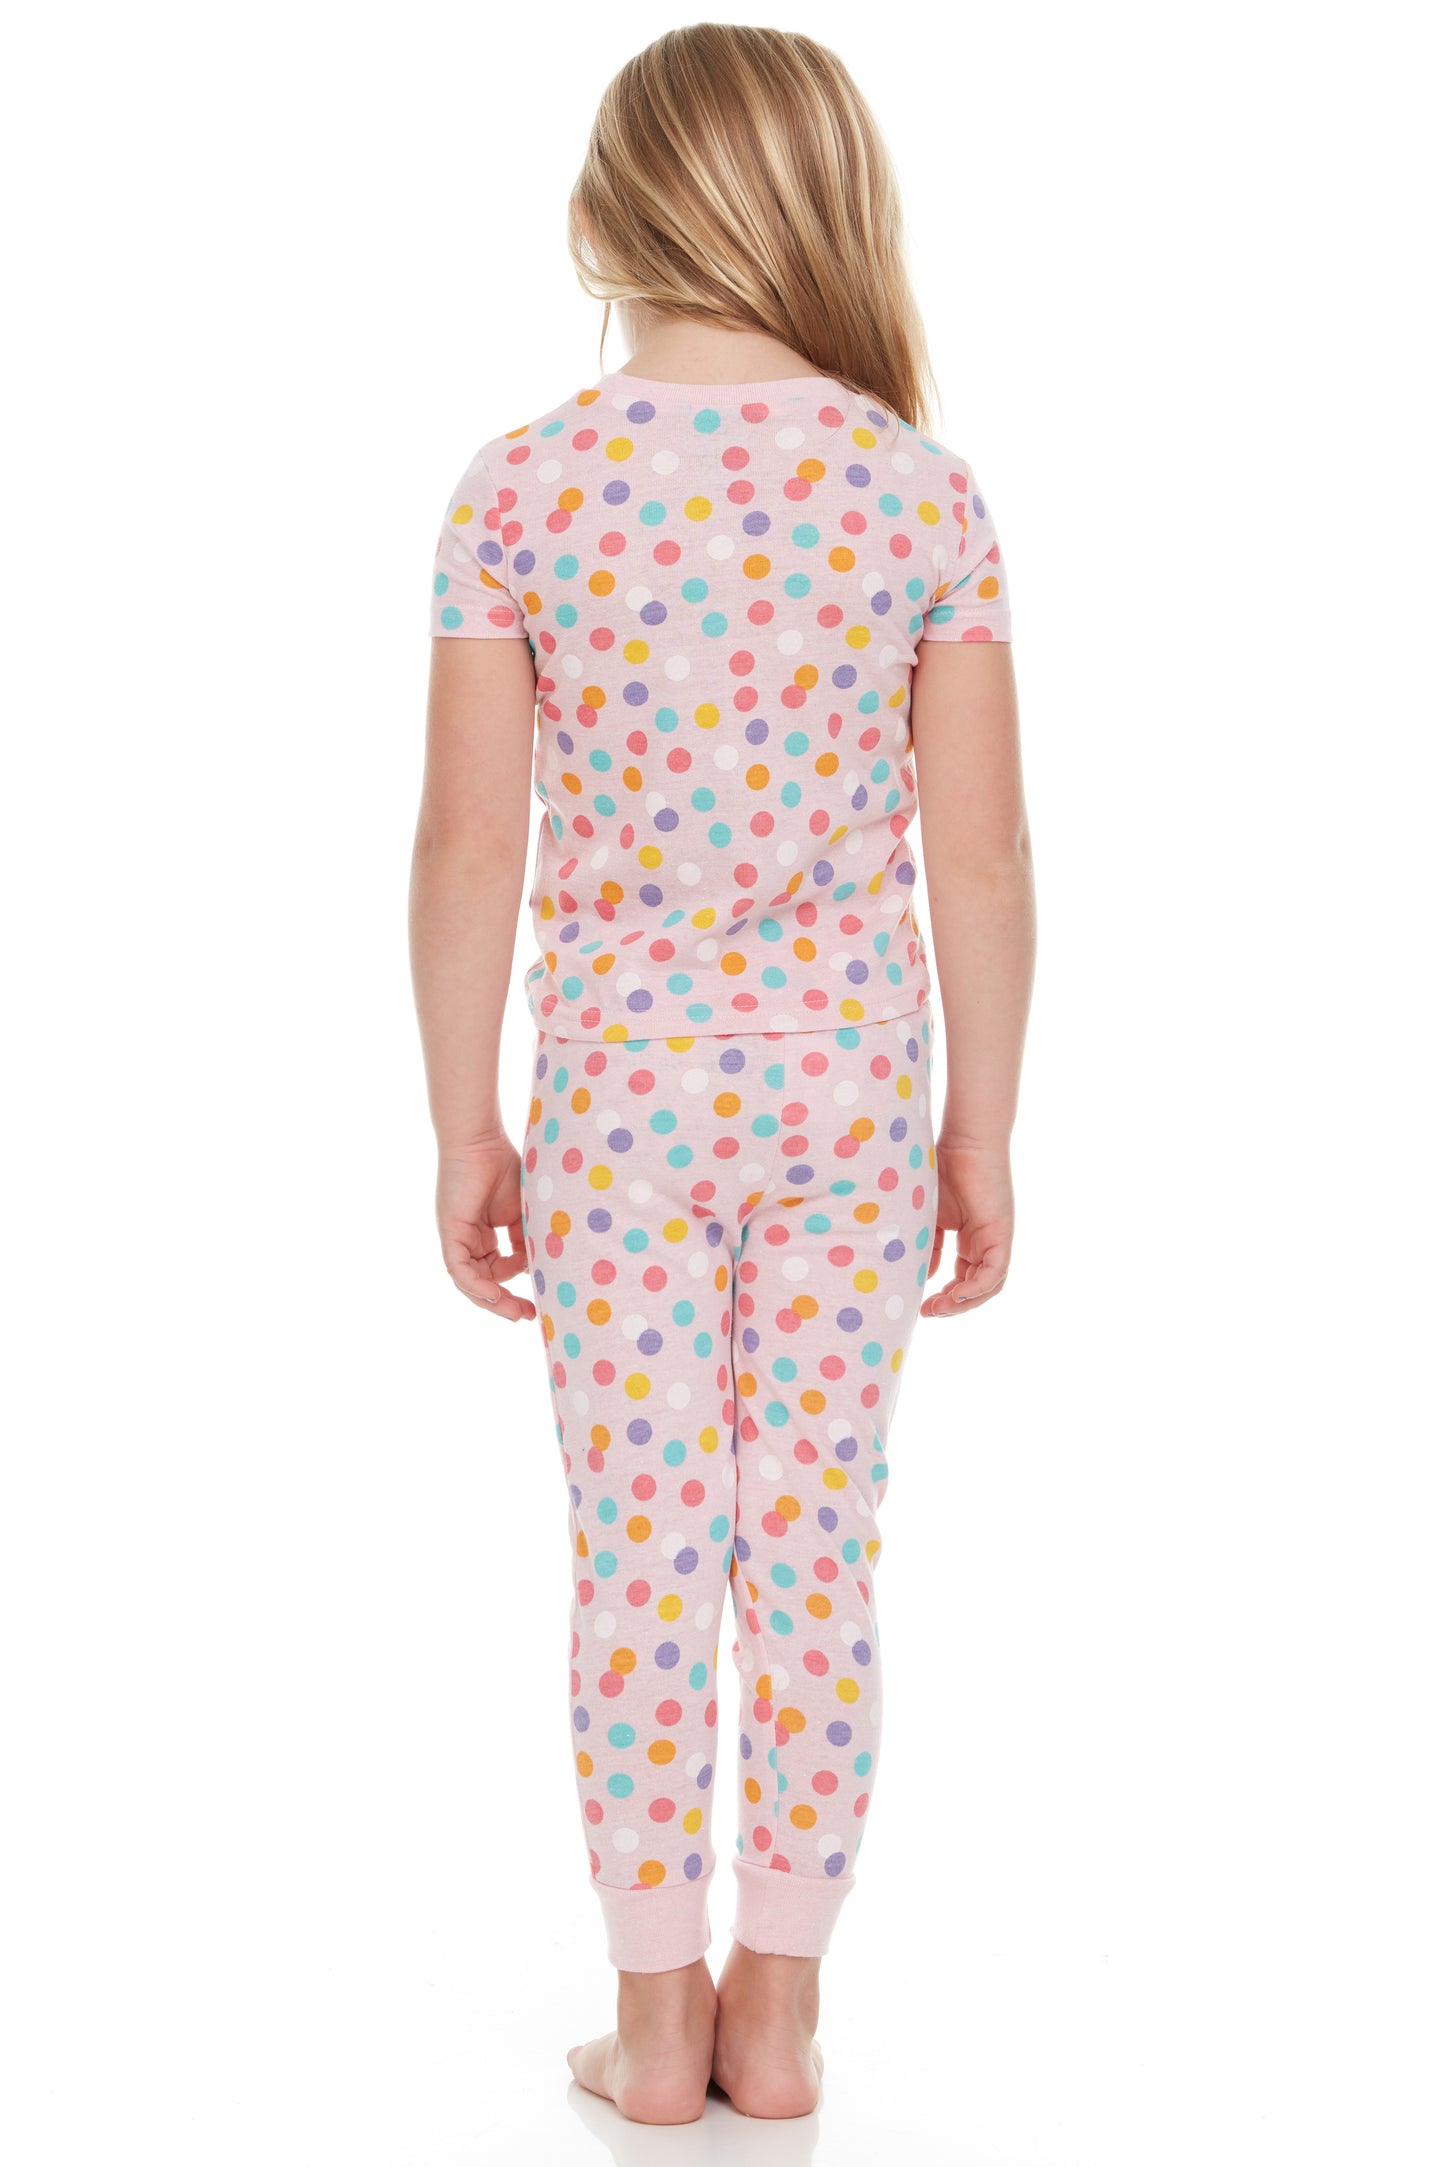 Colorful Dots Shorts Pajamas For Kids Super Soft - 2 Piece Set